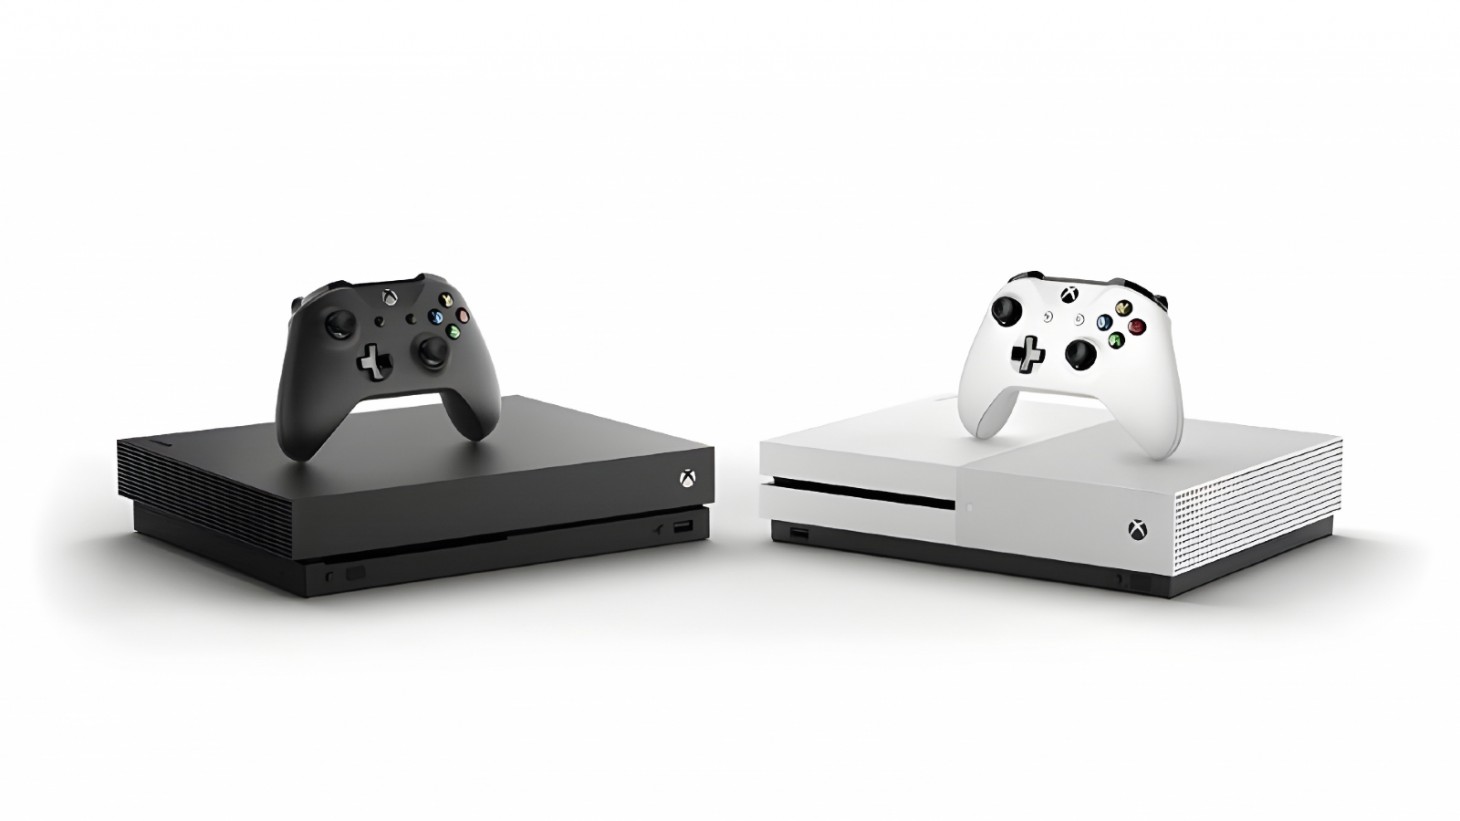 With Xbox One X sale starts on Nov 7, Microsoft says Good bye to